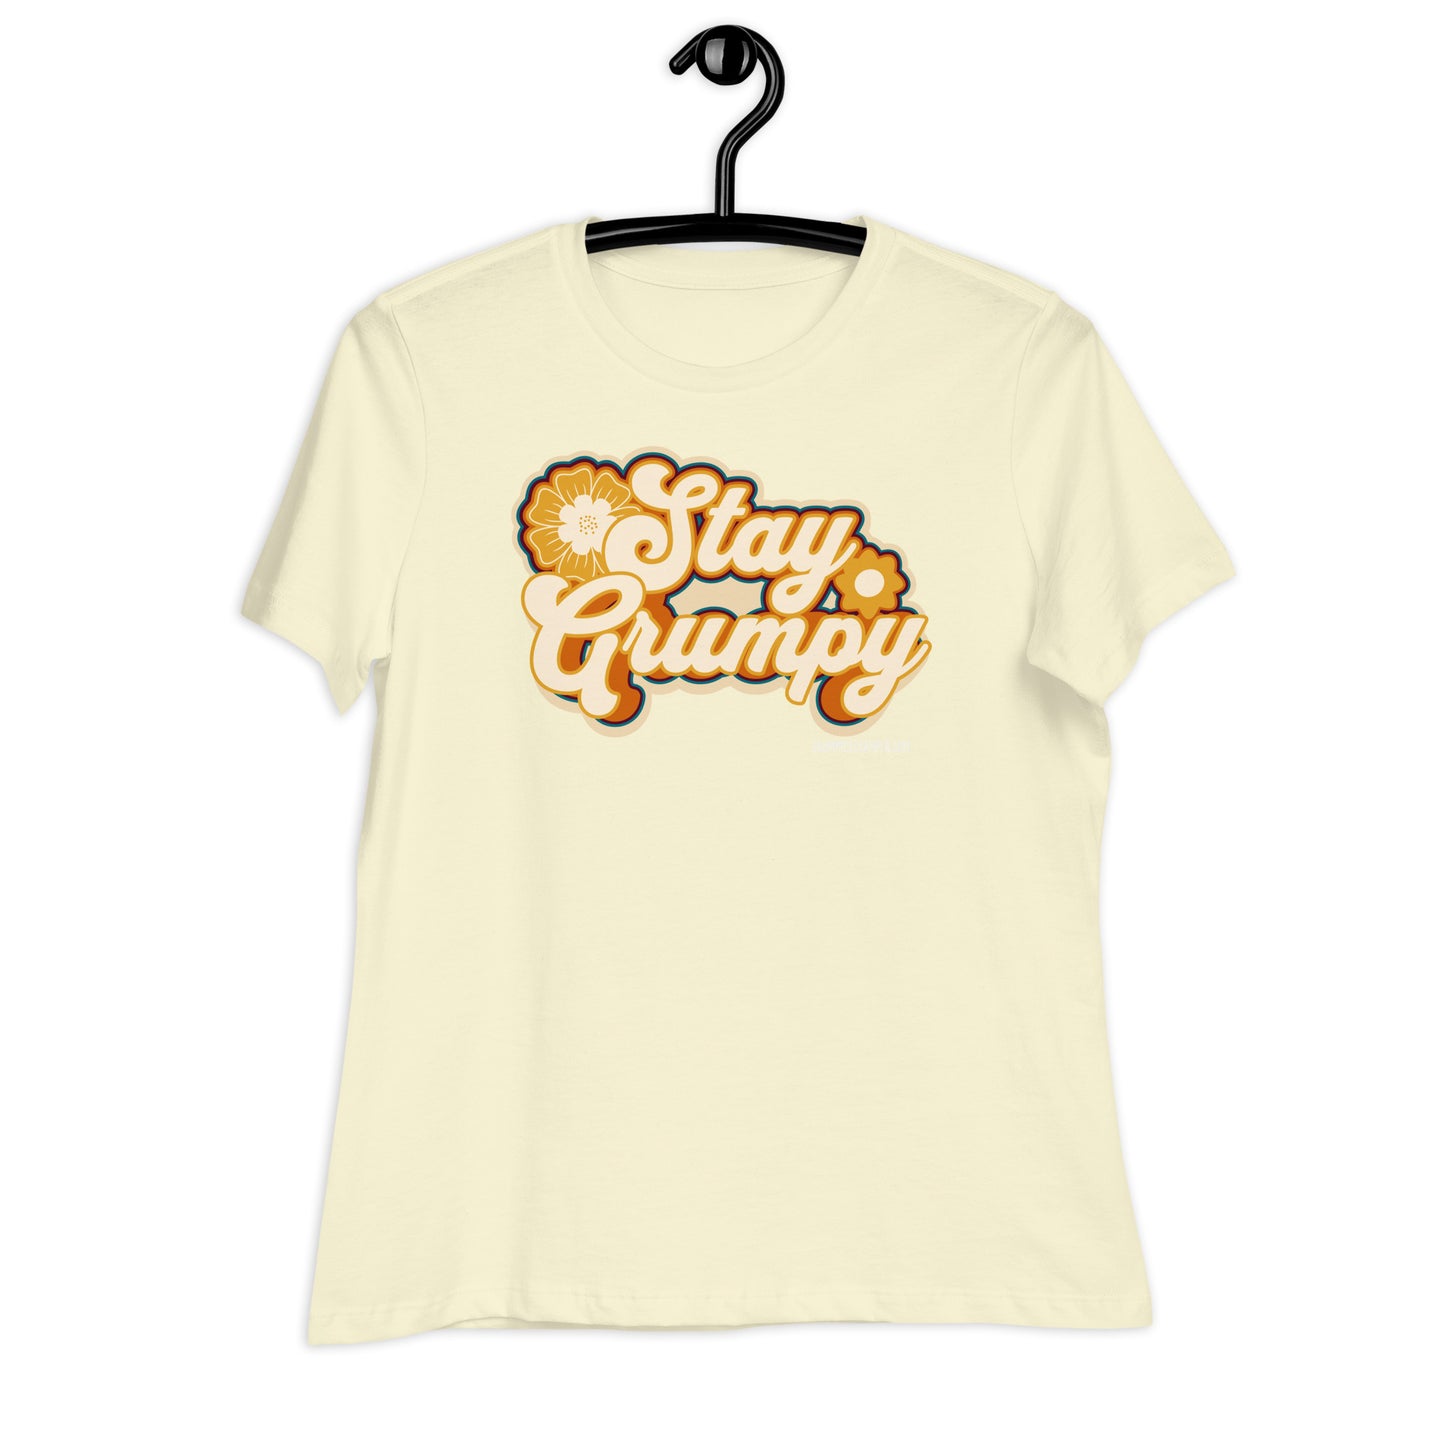 Stay Grumpy Women's Relaxed T-Shirt